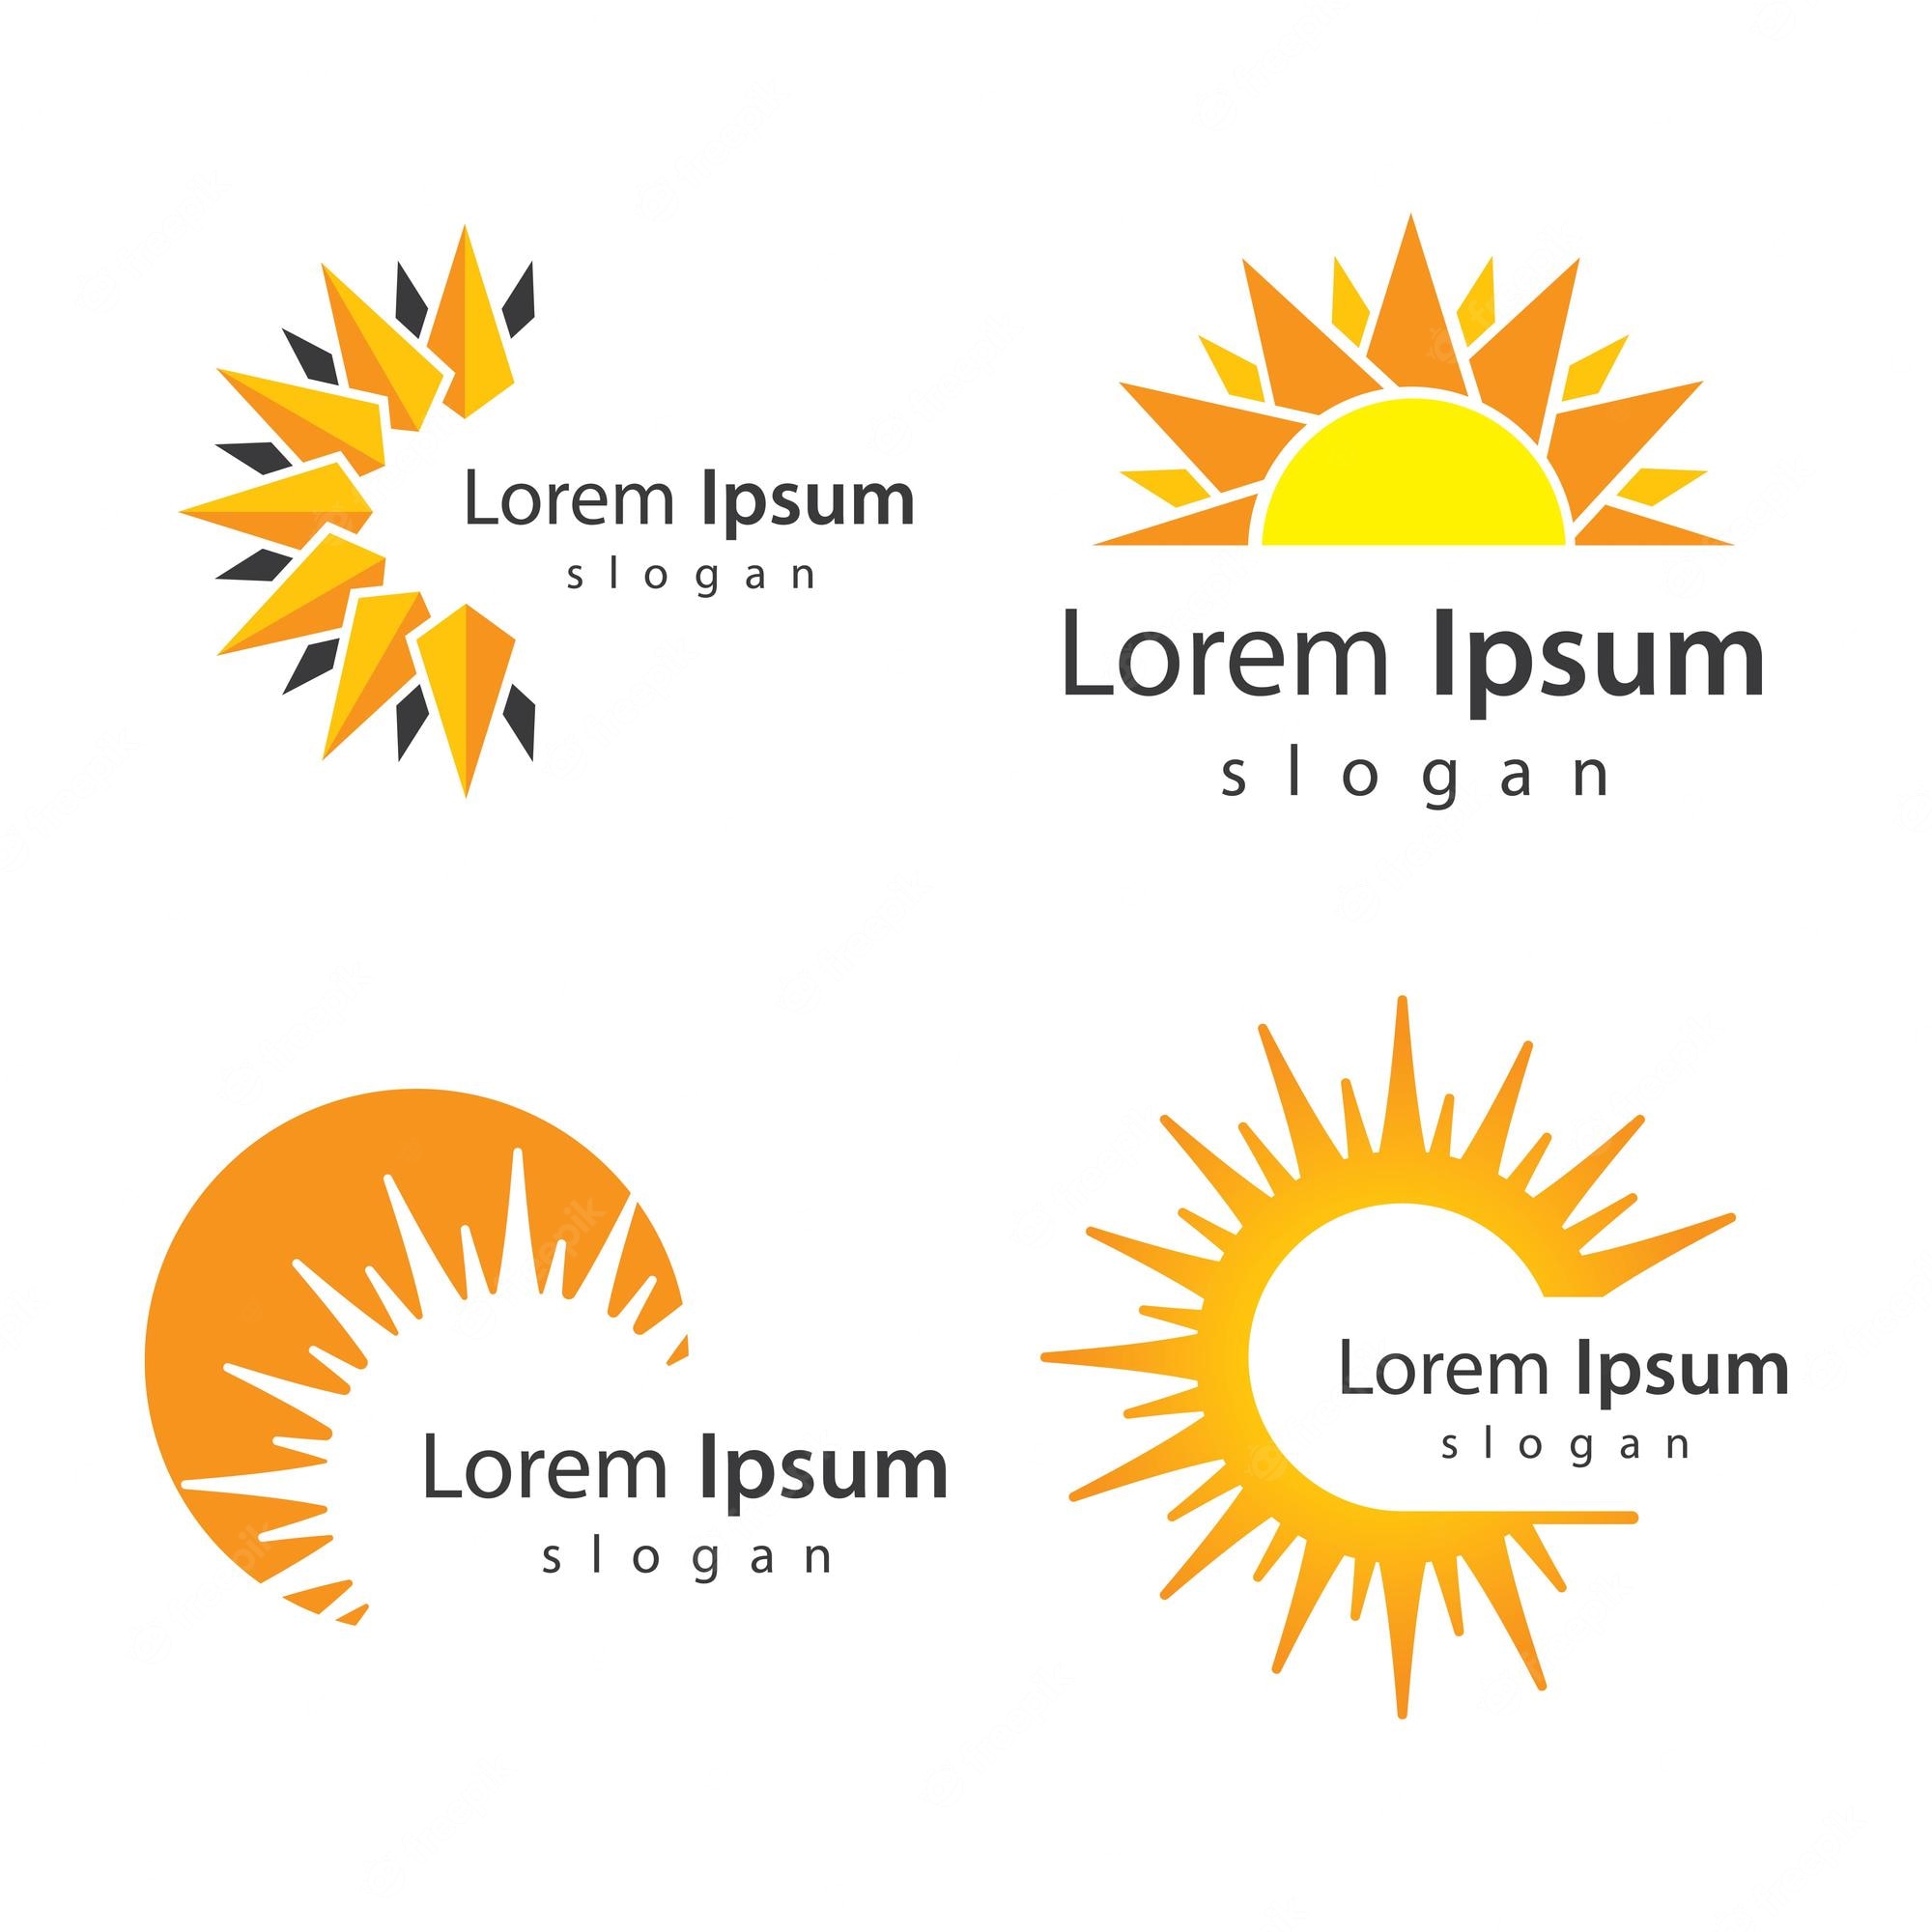 Premium Vector. Sun logo image illustration